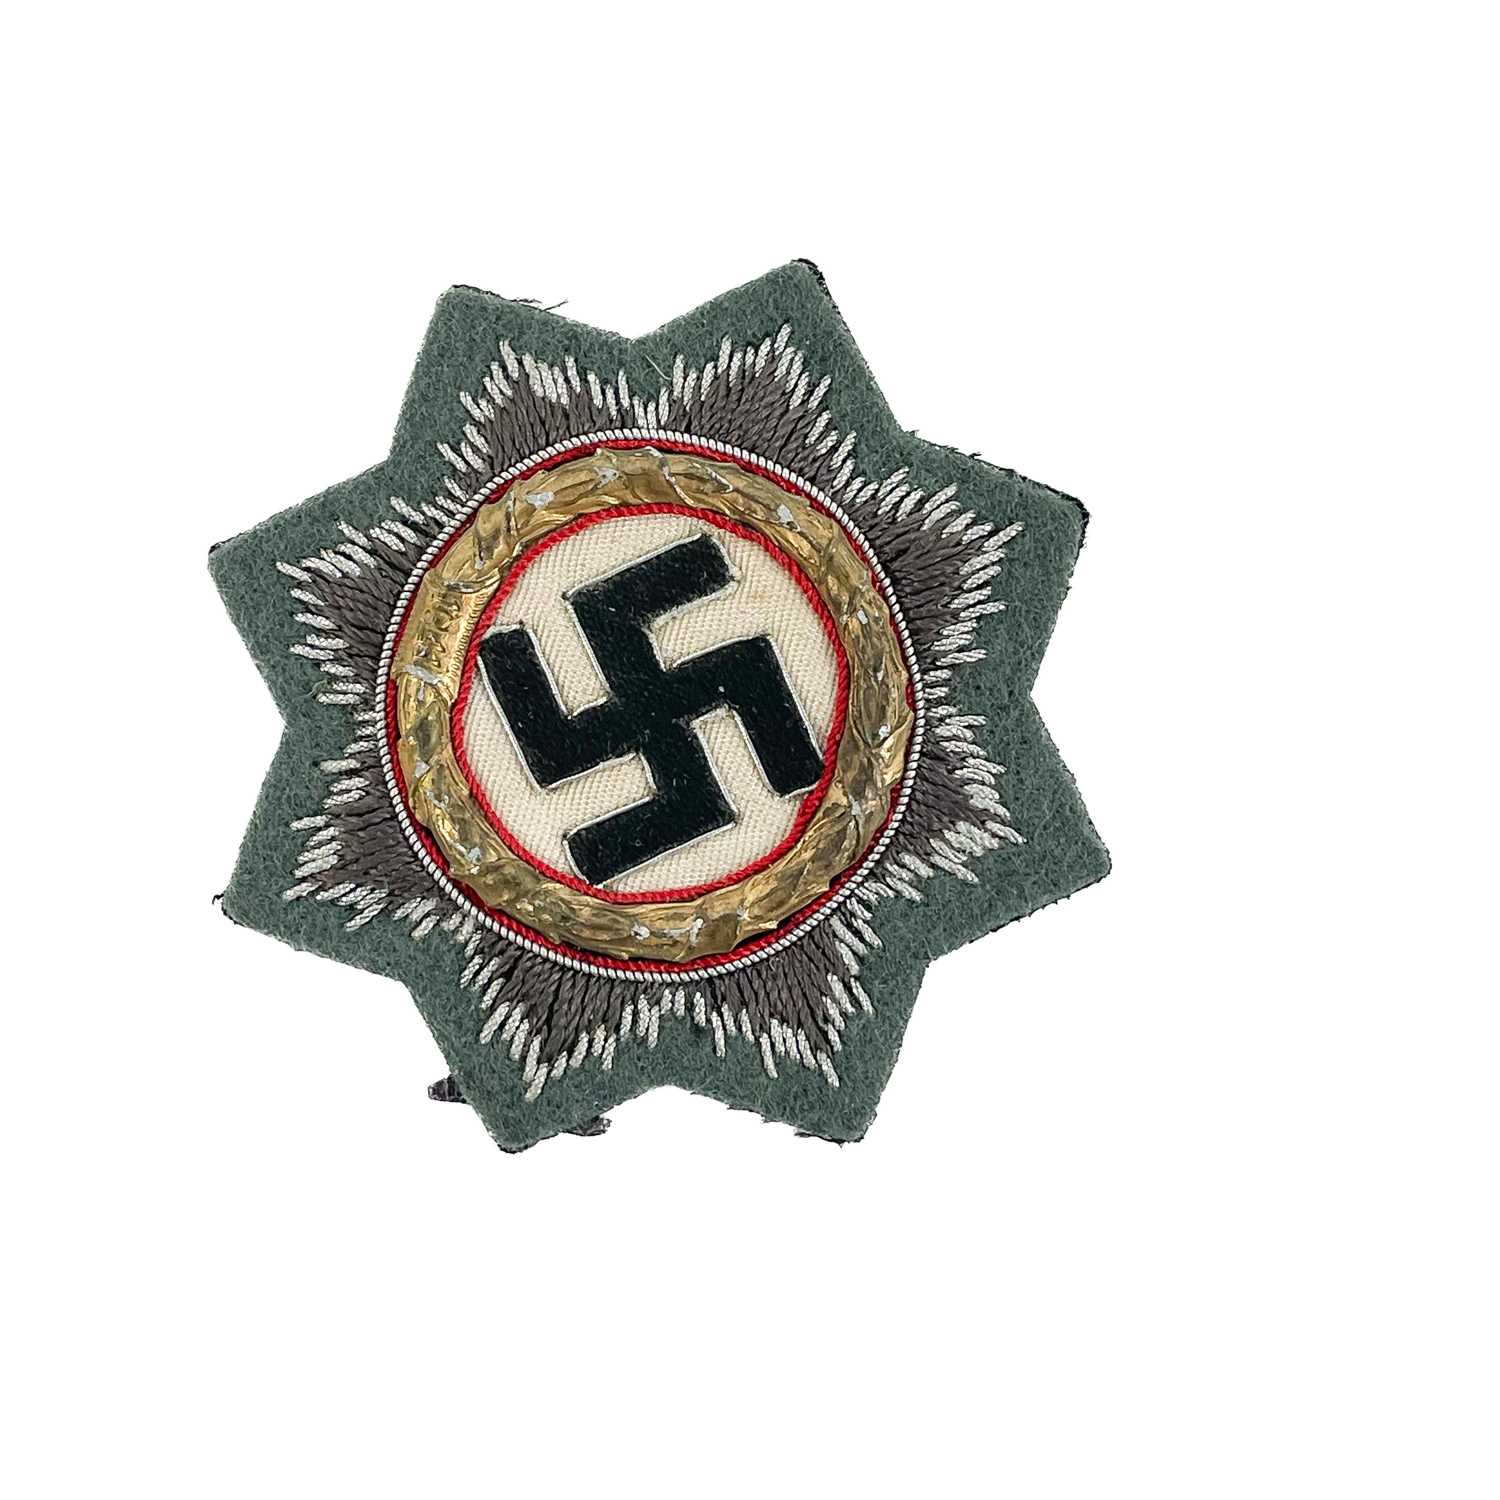 Lot 403 - World War II Interest – Third Reich Swastika Cloth Badge.